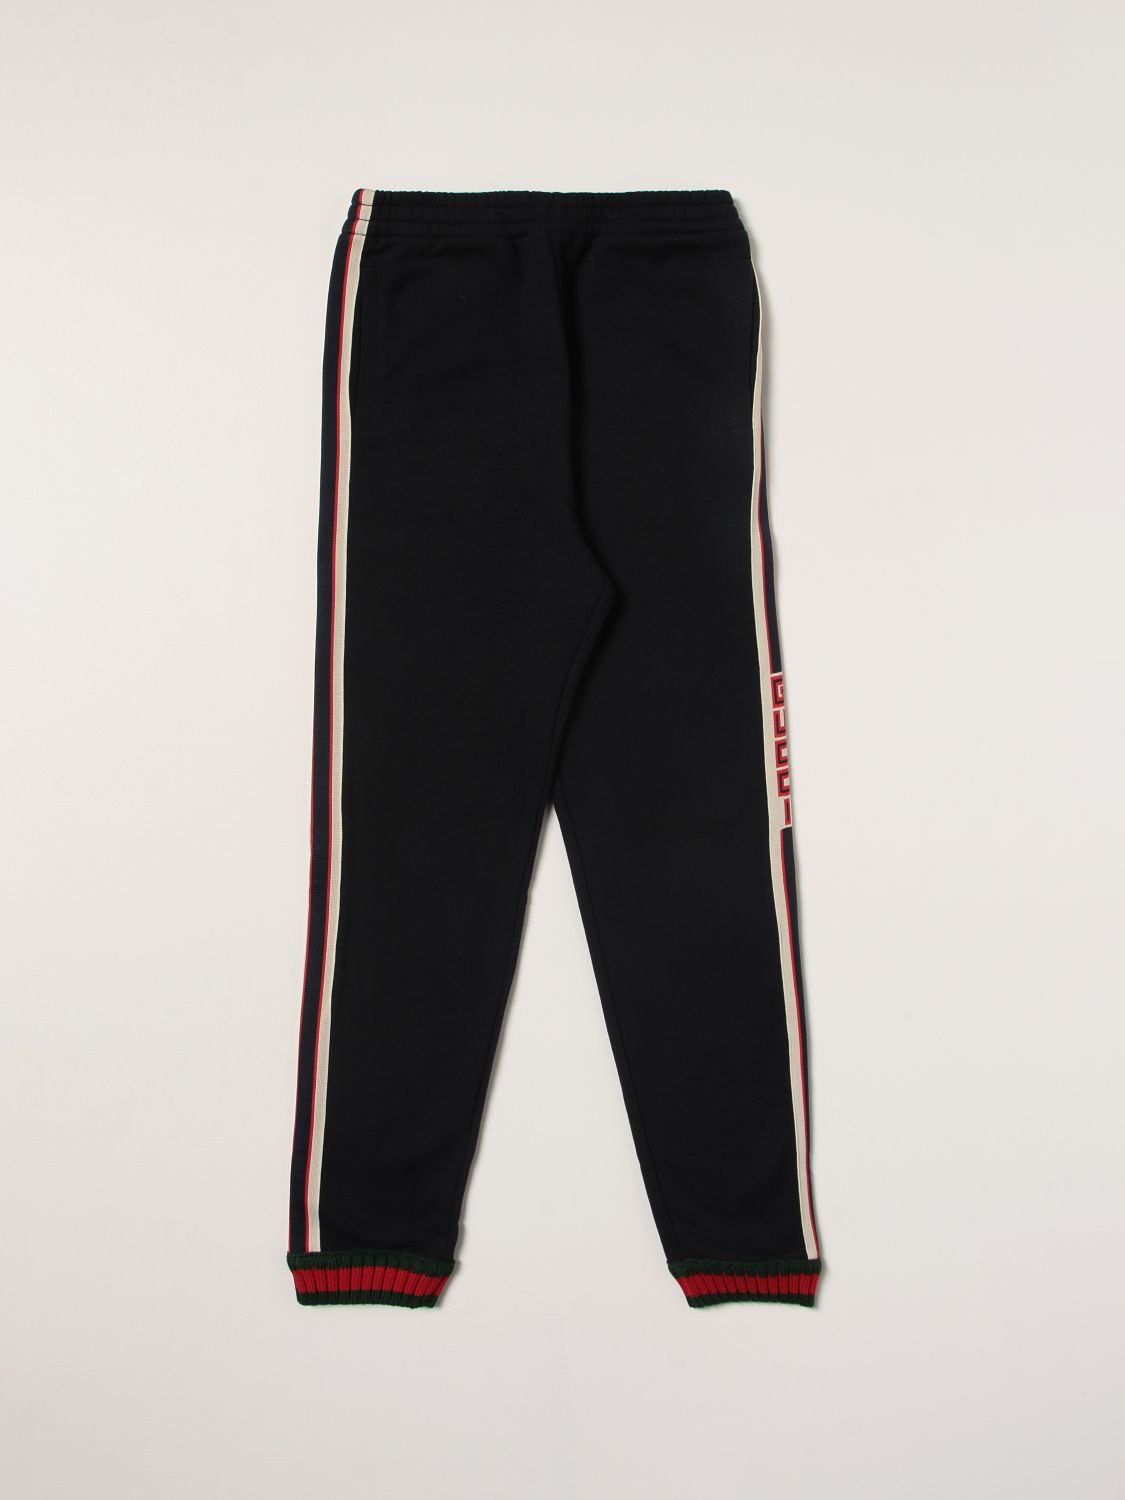 GUCCI: pants for boys Blue Gucci pants 497950 X9L52 online at